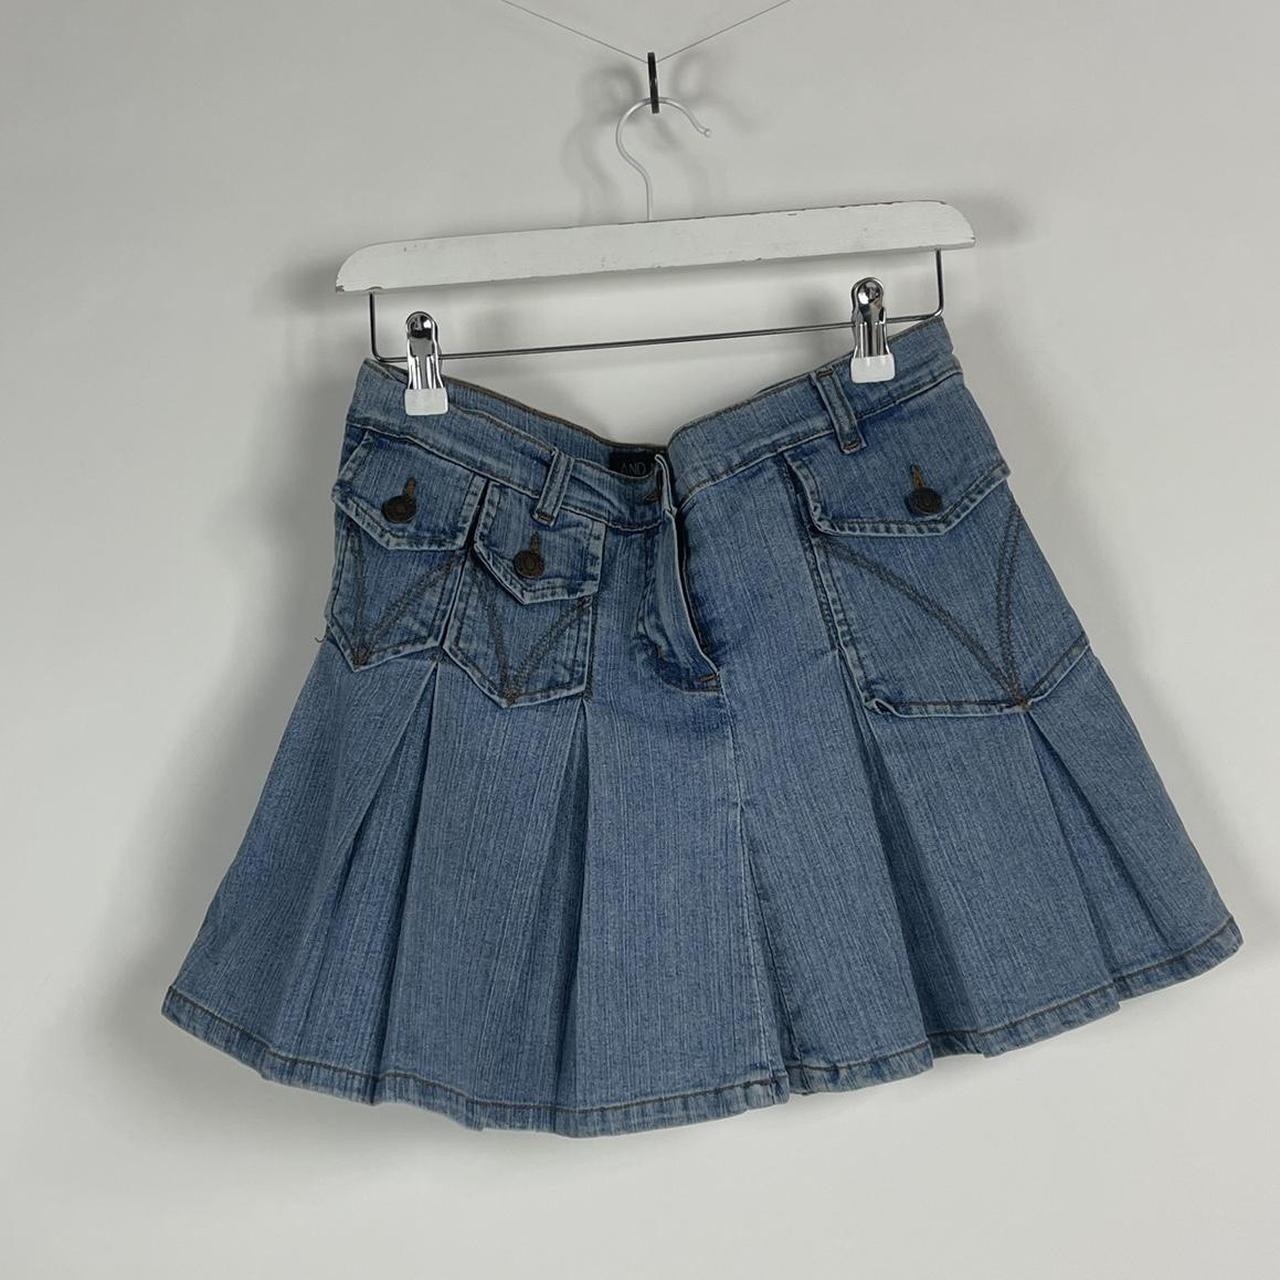 Vintage pleated denim mini skirt lovely stretchy... - Depop